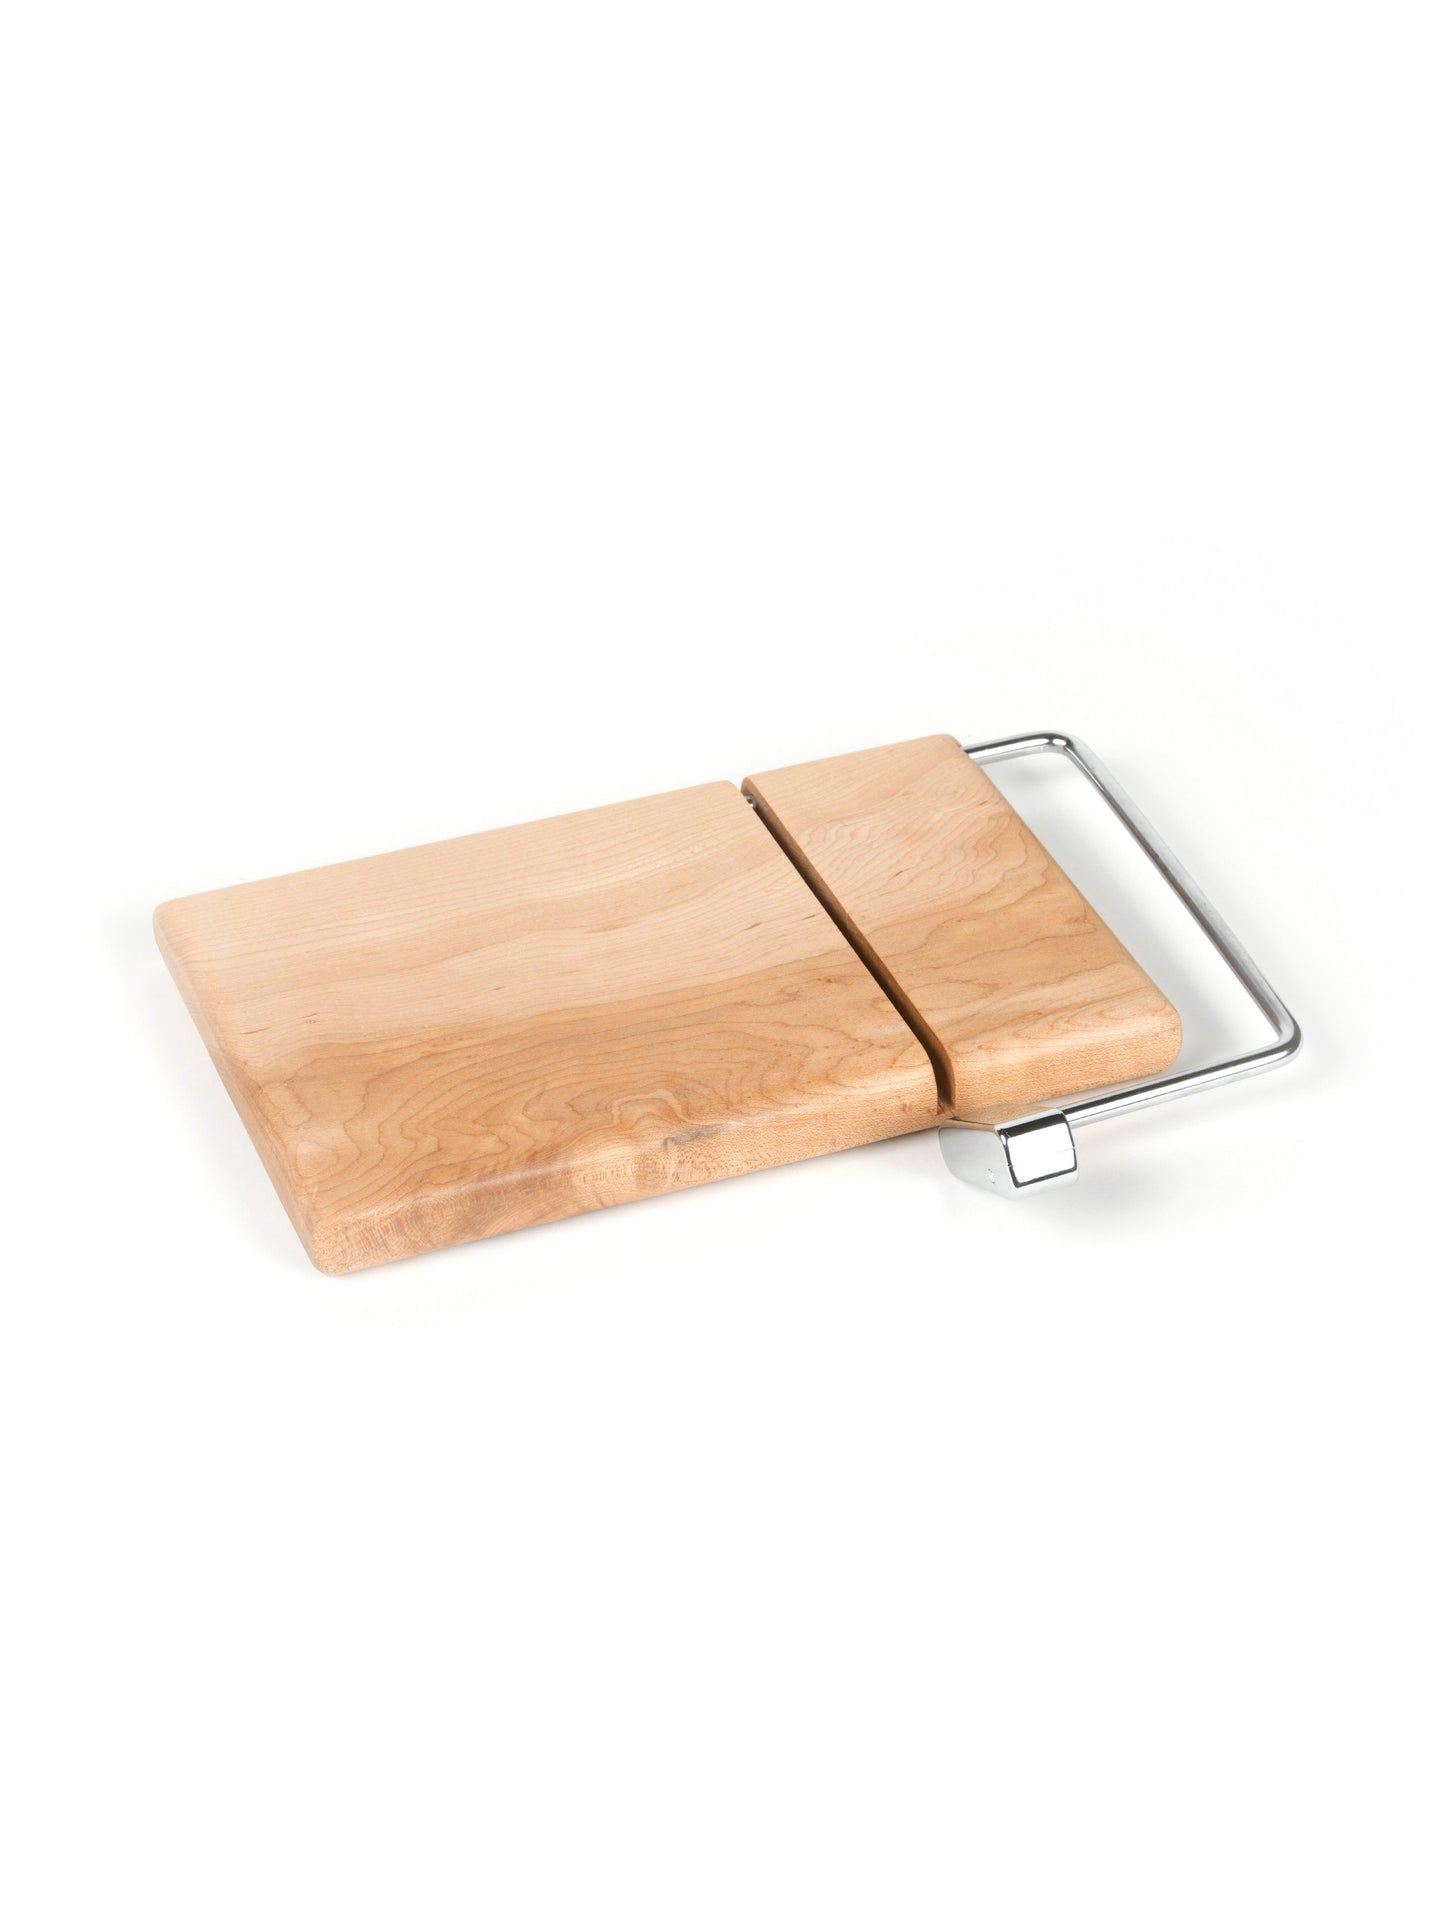 Artisanal Slicer Board Birdseye Maple Weston Table